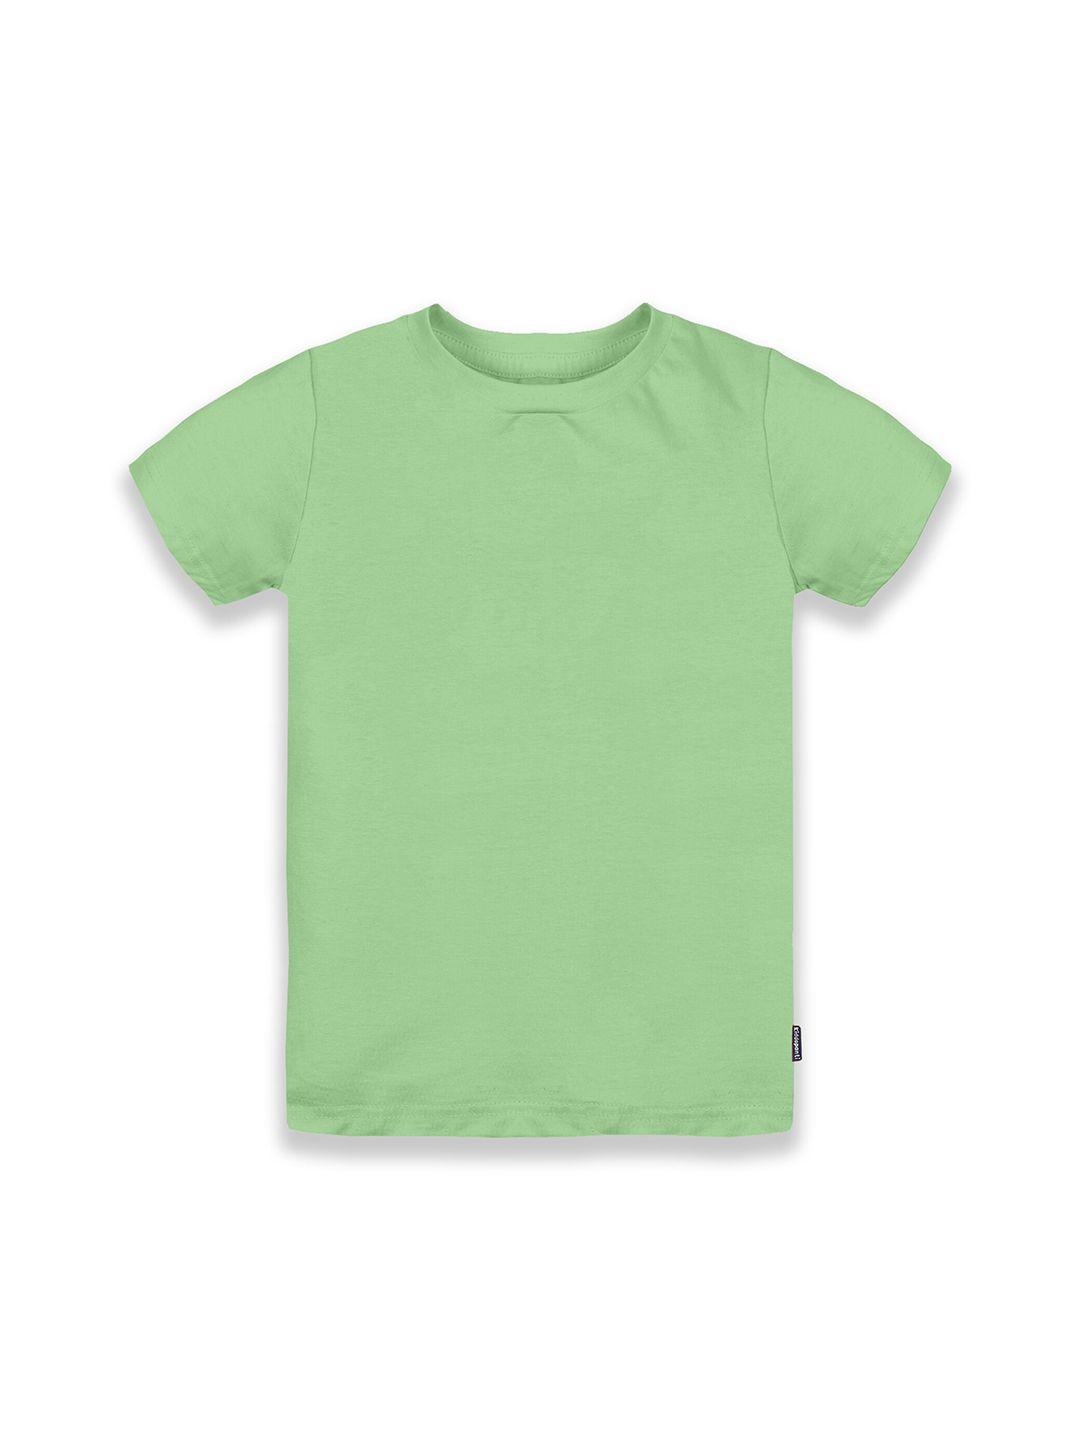 KiddoPanti Boys Green Solid Round neck Pure Cotton T-shirt